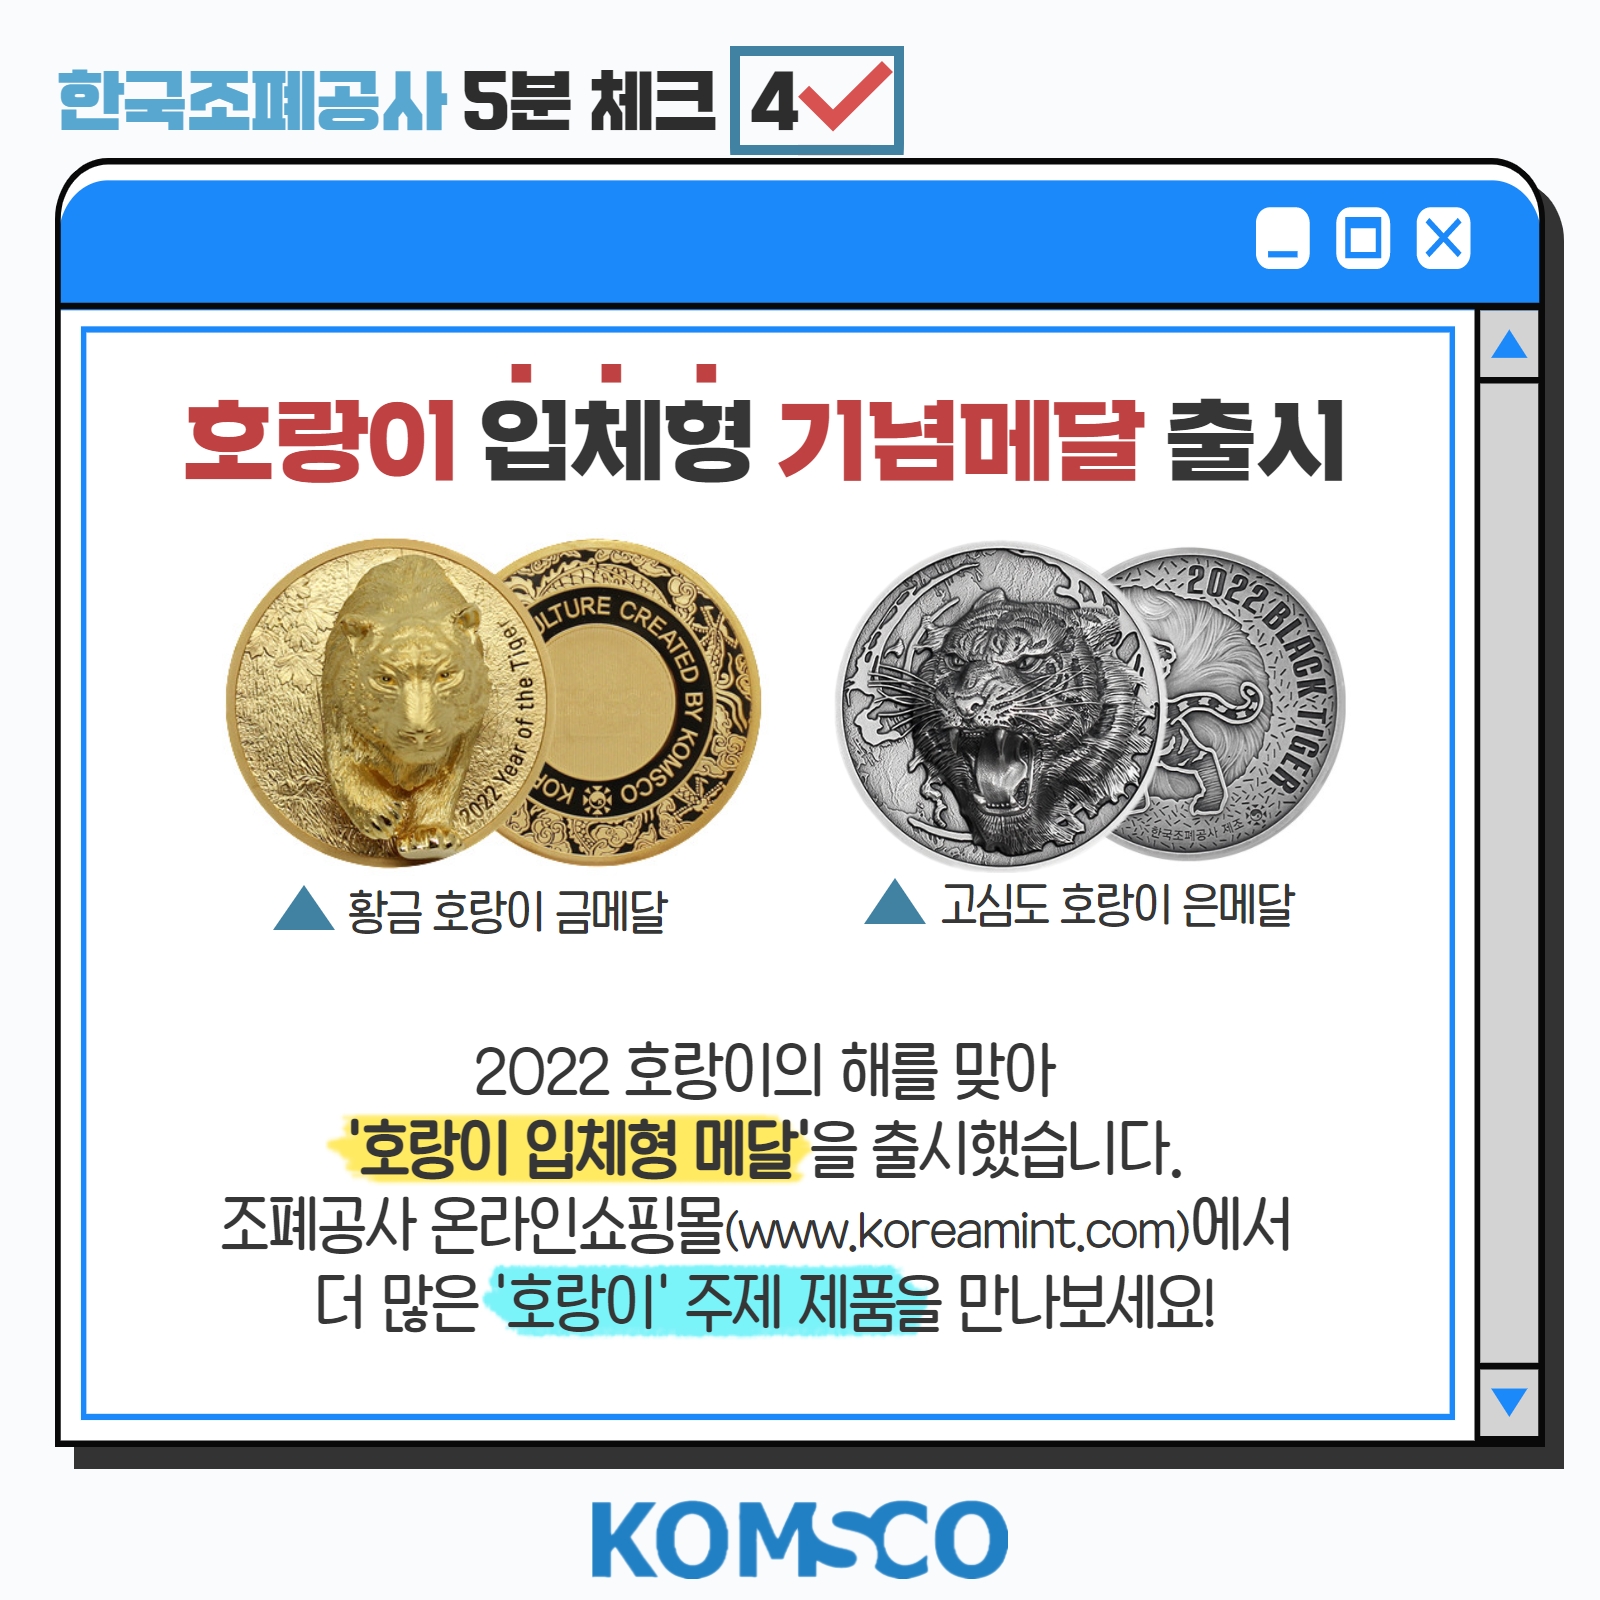 KOMSCO 5분 체크 #4 호랑이 입체형 기념메달 출시  2022 호랑이의 해를 맞아 '호랑이 입체형 메달'을 출시했습니다. 조폐공사 온라인쇼핑몰(www.koreamint.com)에서 더 많은 '호랑이' 주제 제품을 만나보세요! 